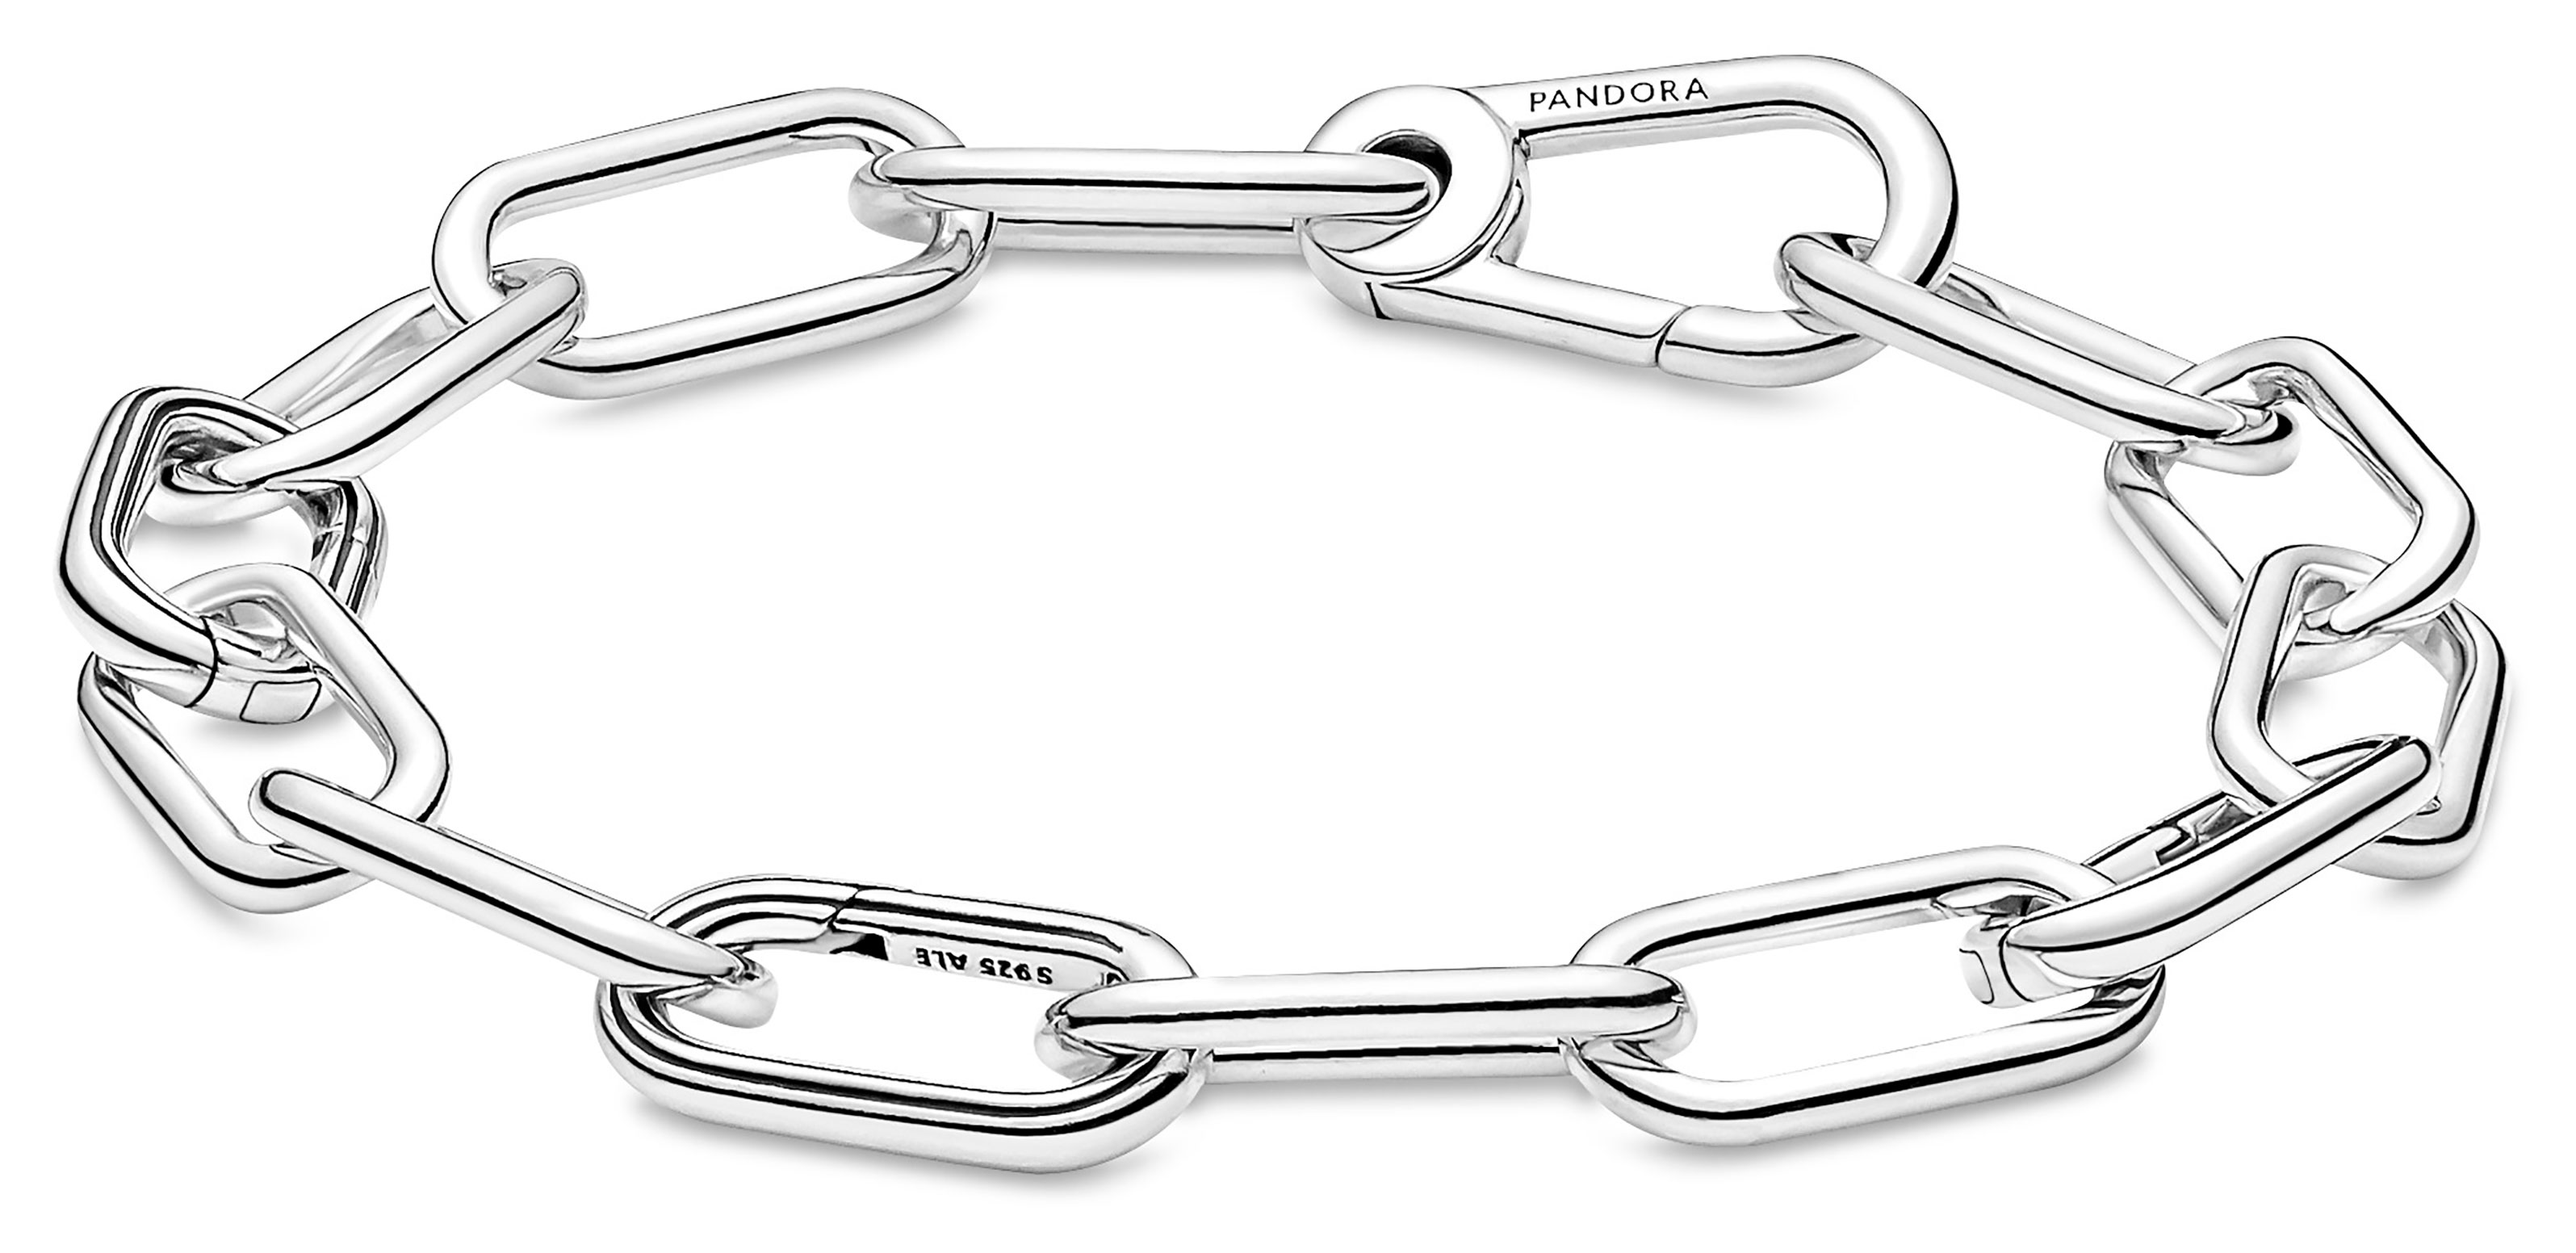 REVIEW: Pandora ME Link Chain Bracelets - The Art of Pandora